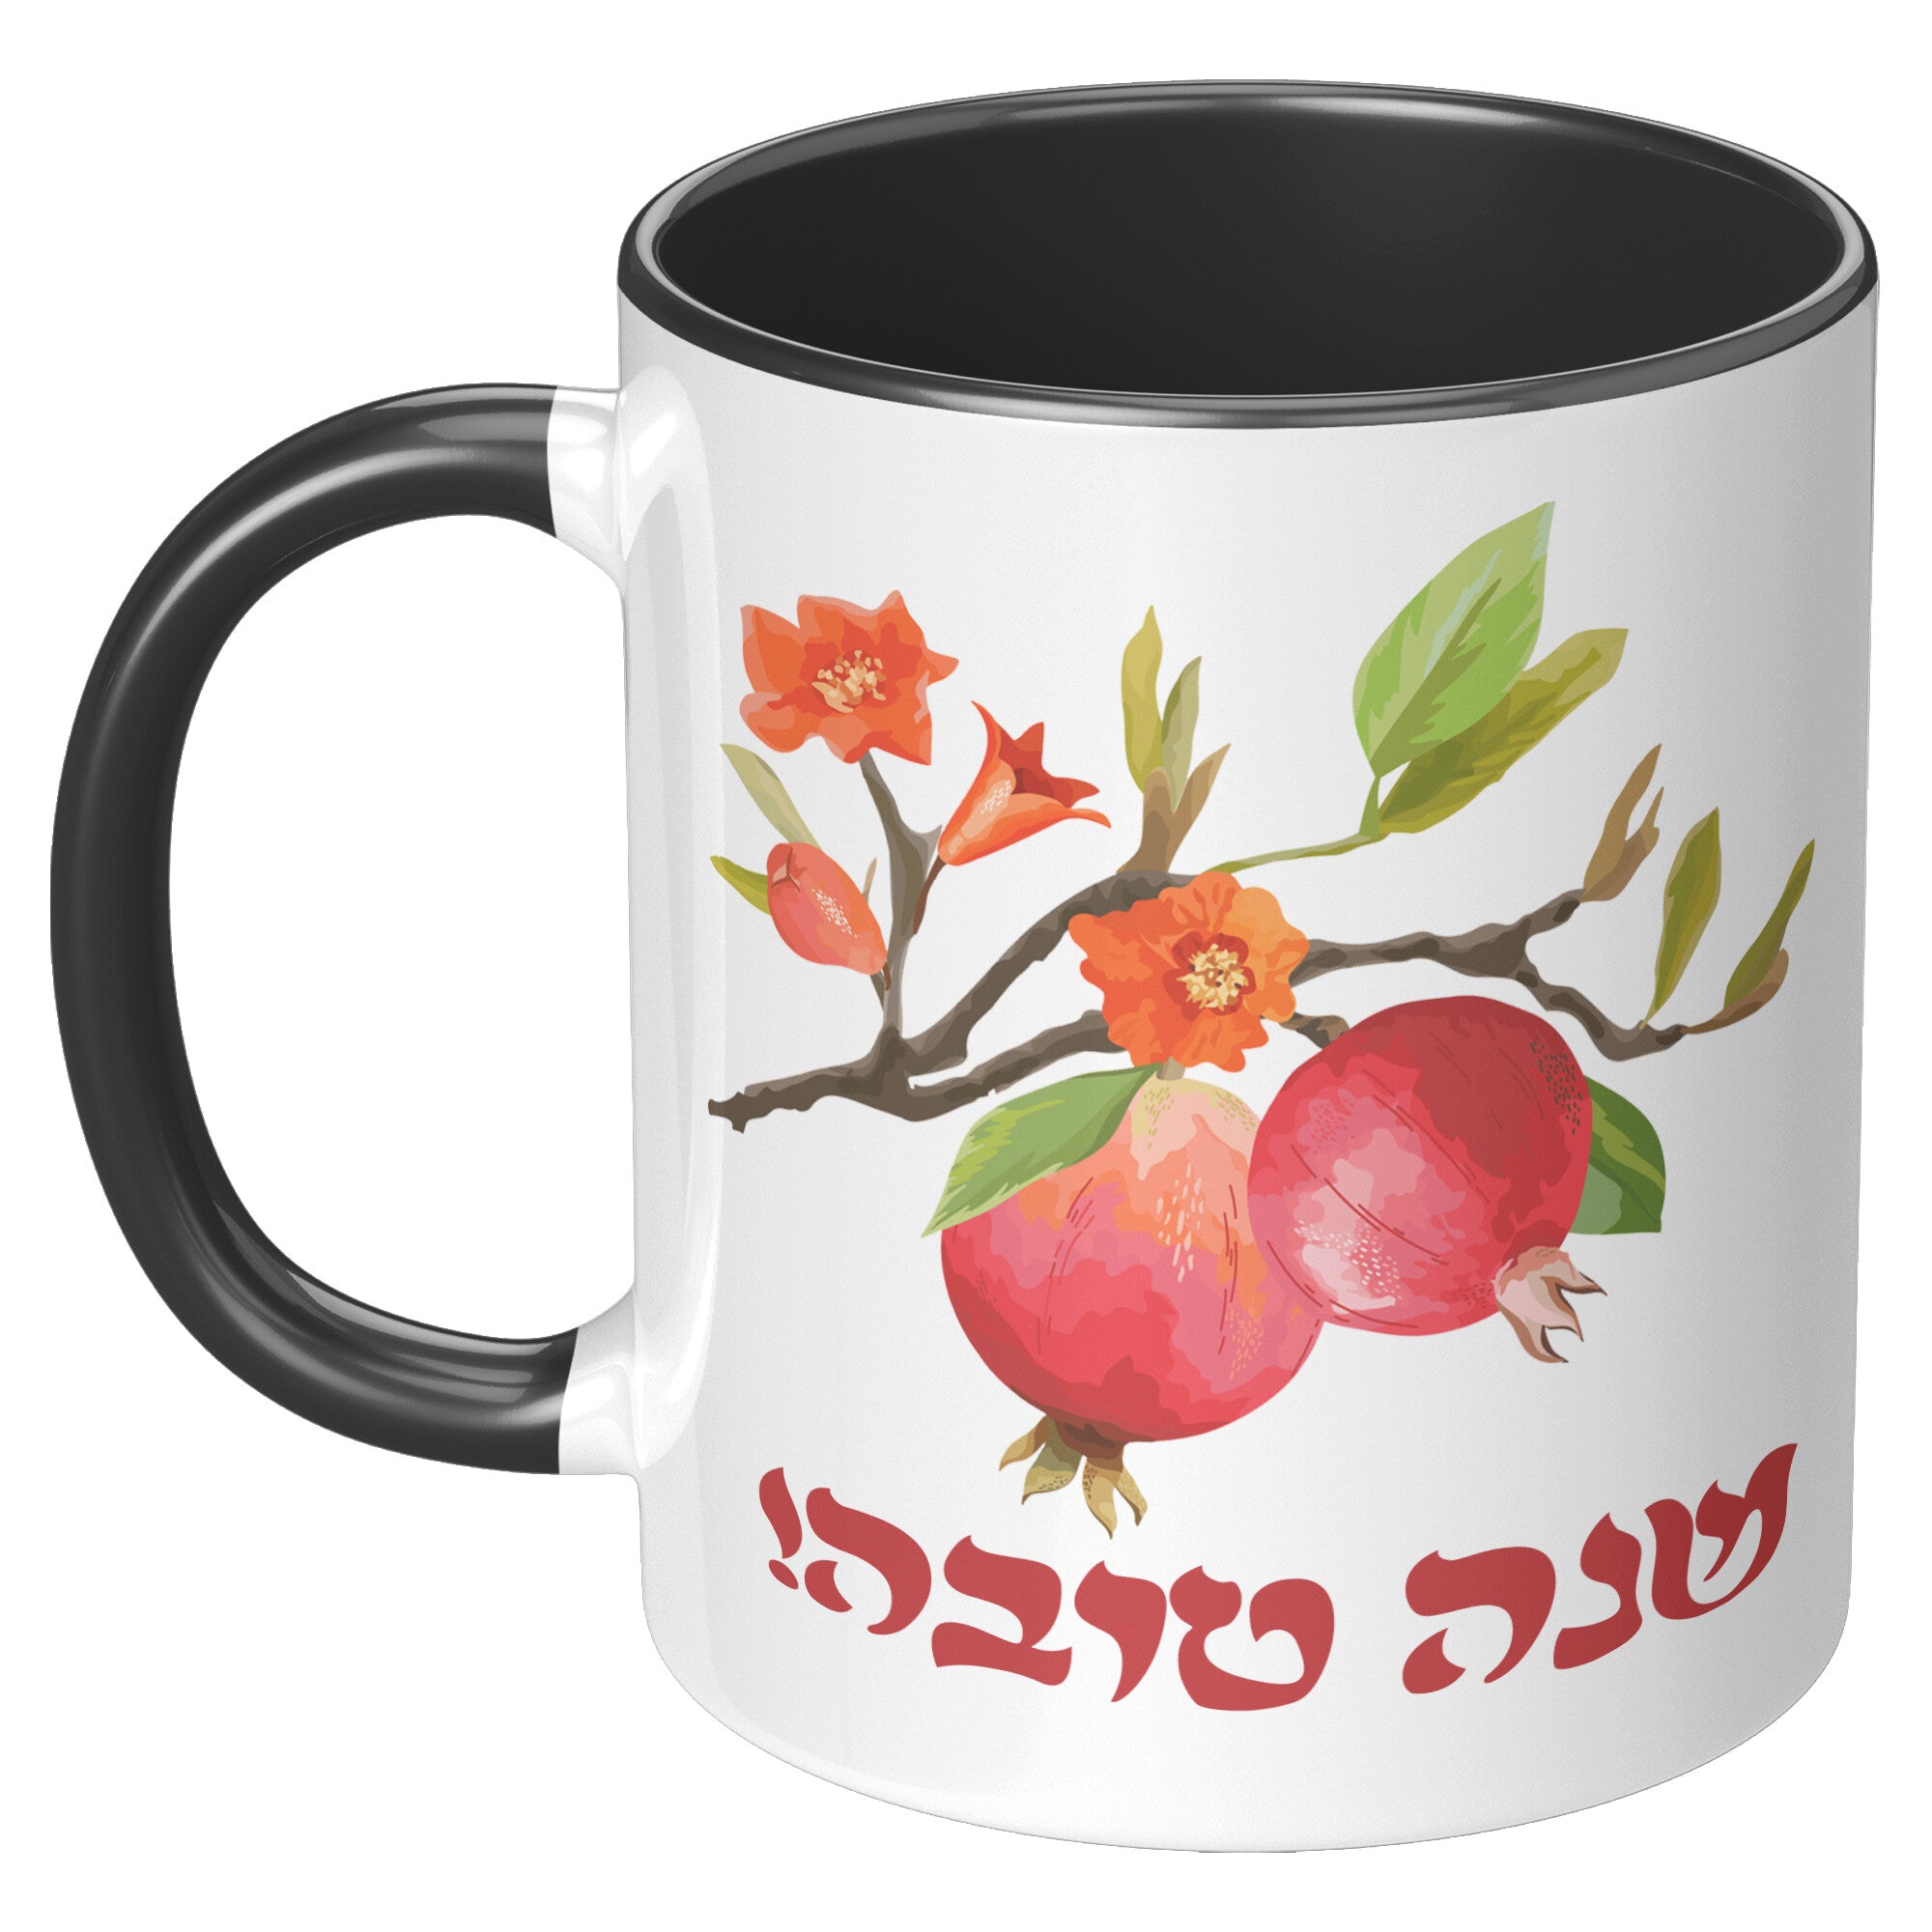 Shana Tova Pomegranate Mug With Hebrew